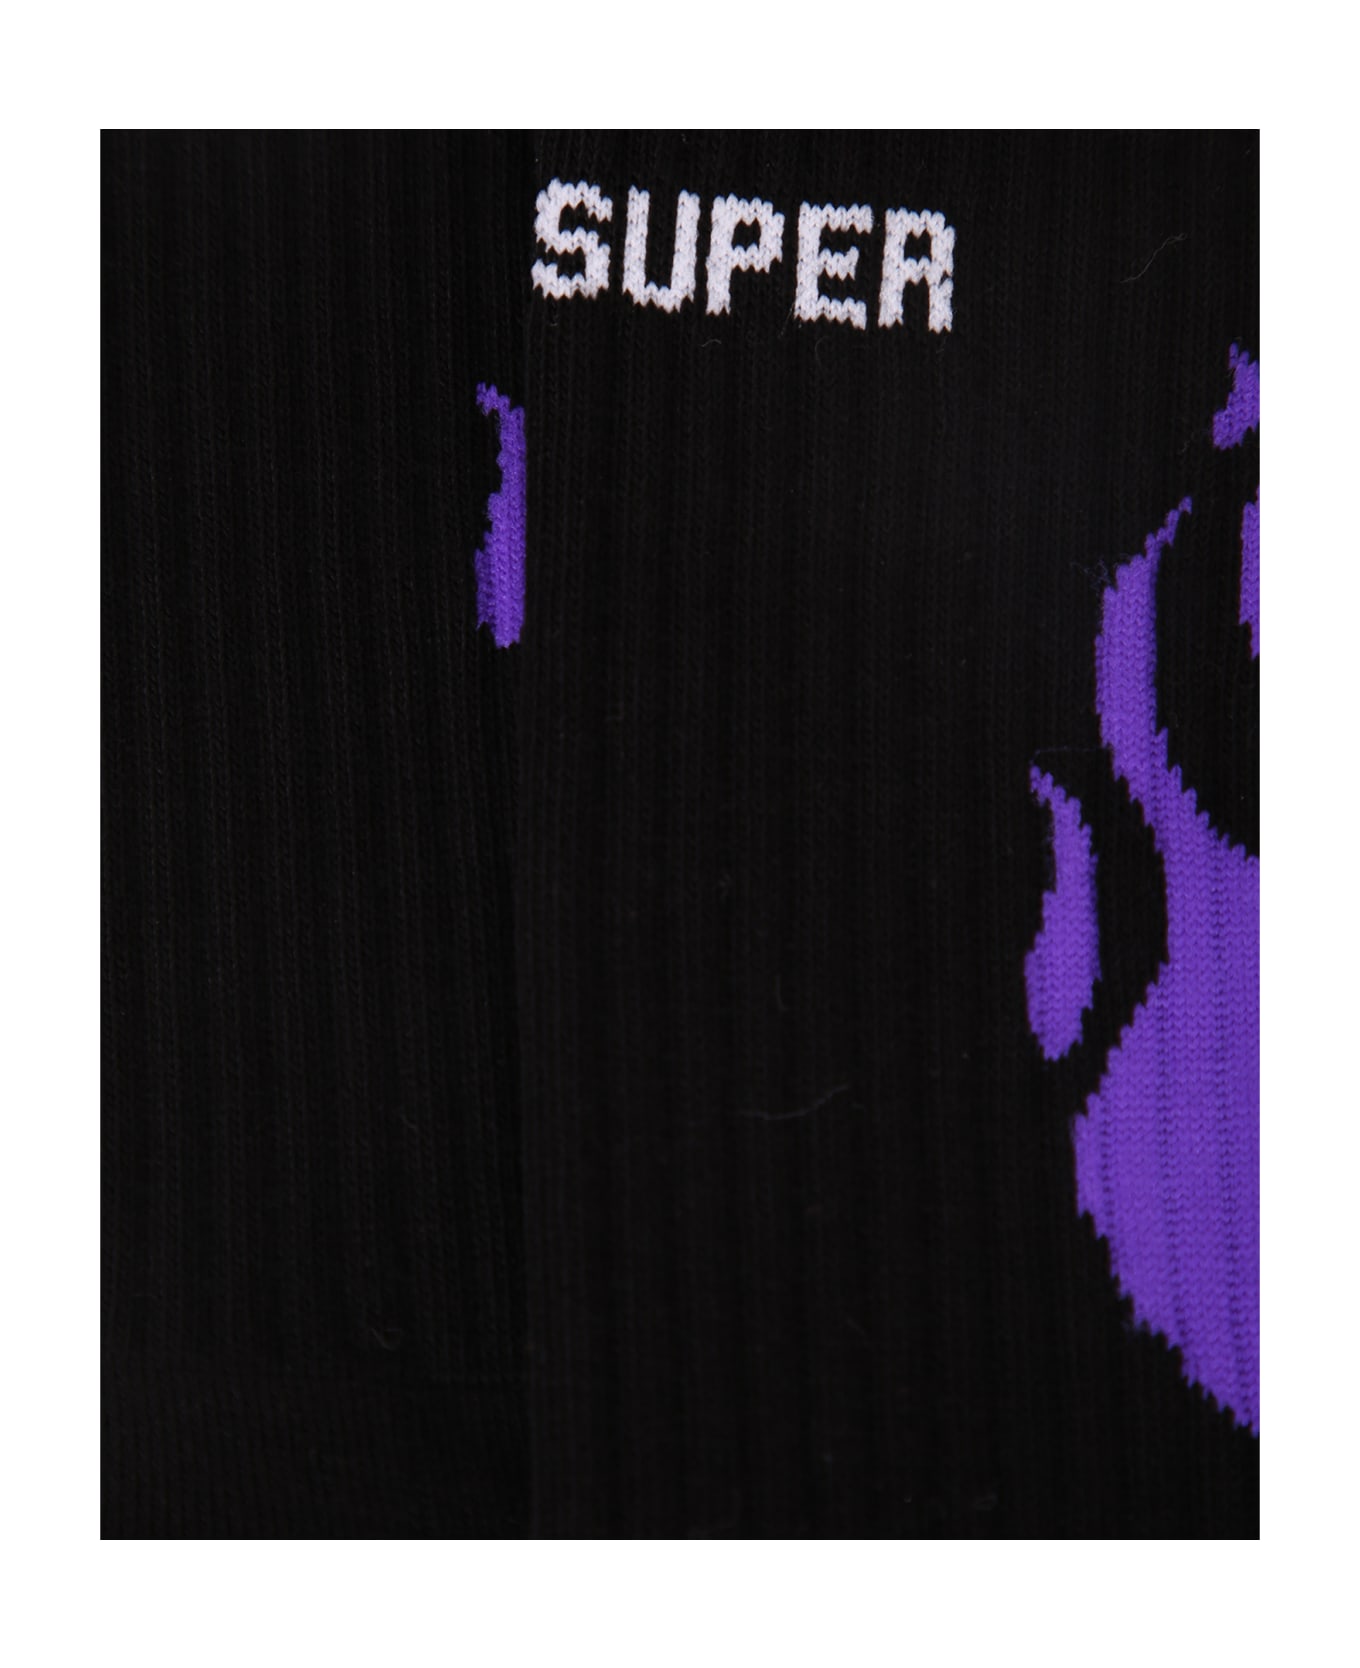 Vision of Super Flame Print Socks - Black